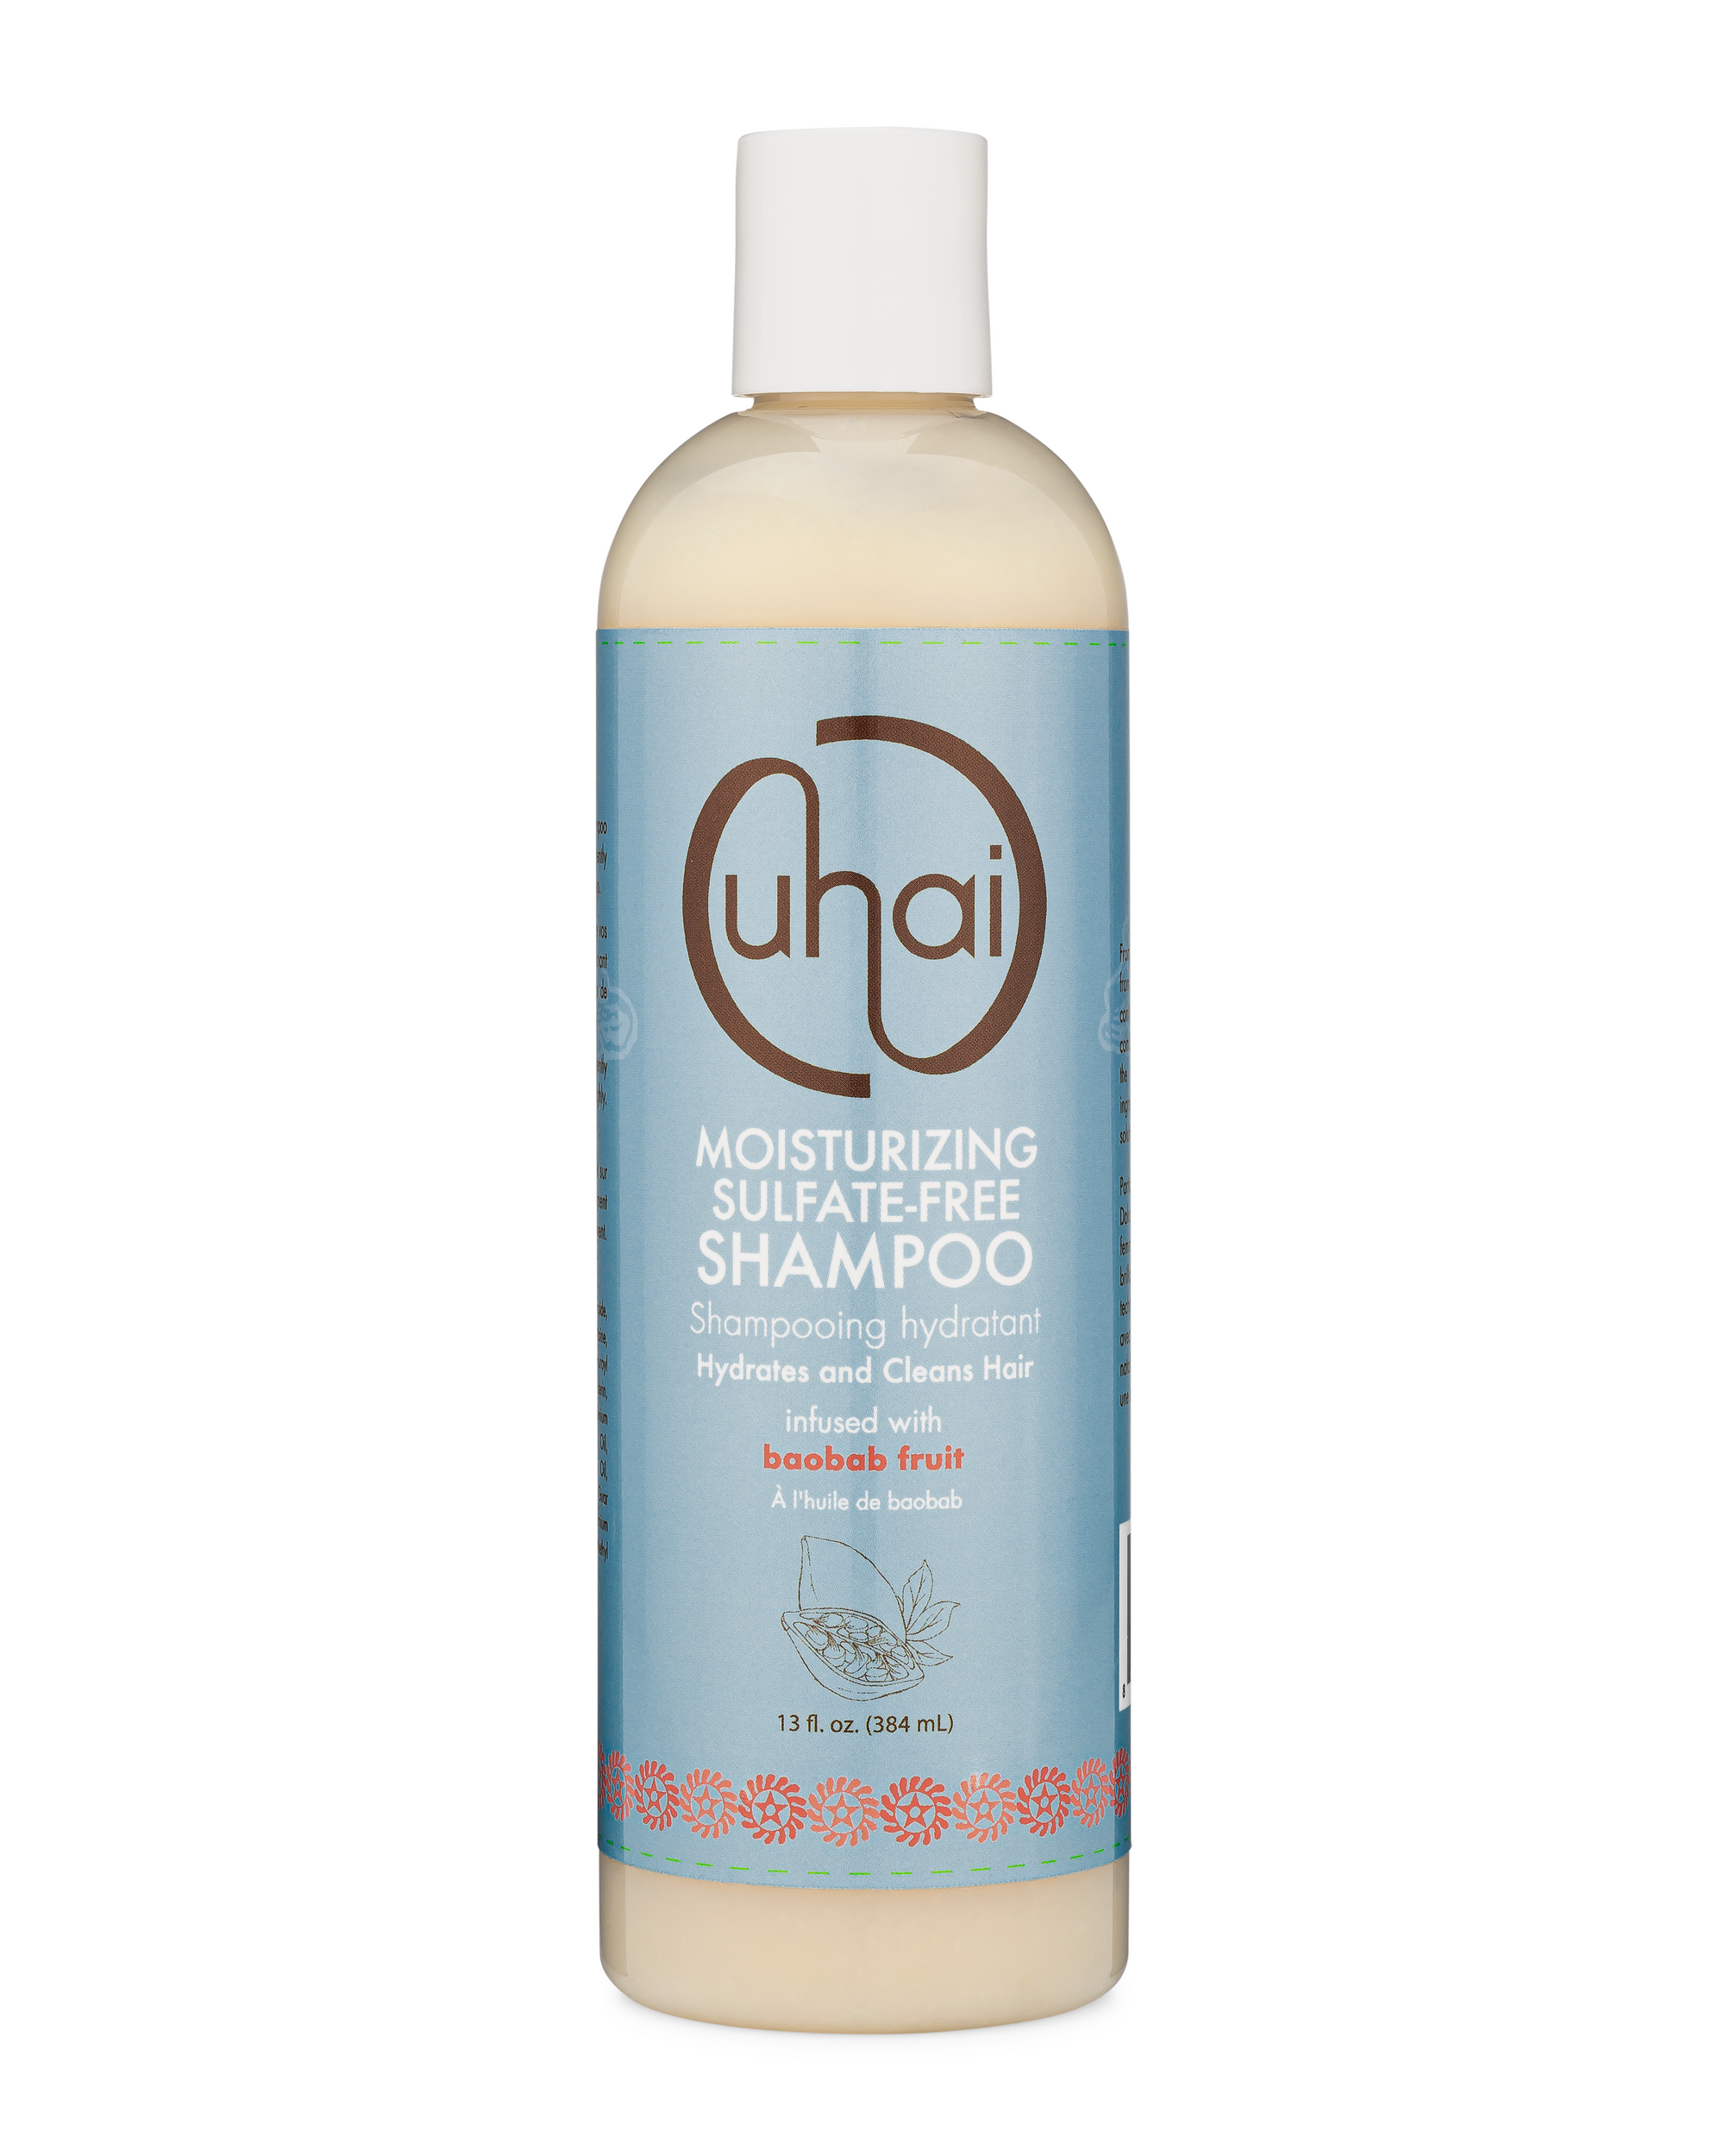 Moisturizing Sulfate-Free Shampoo